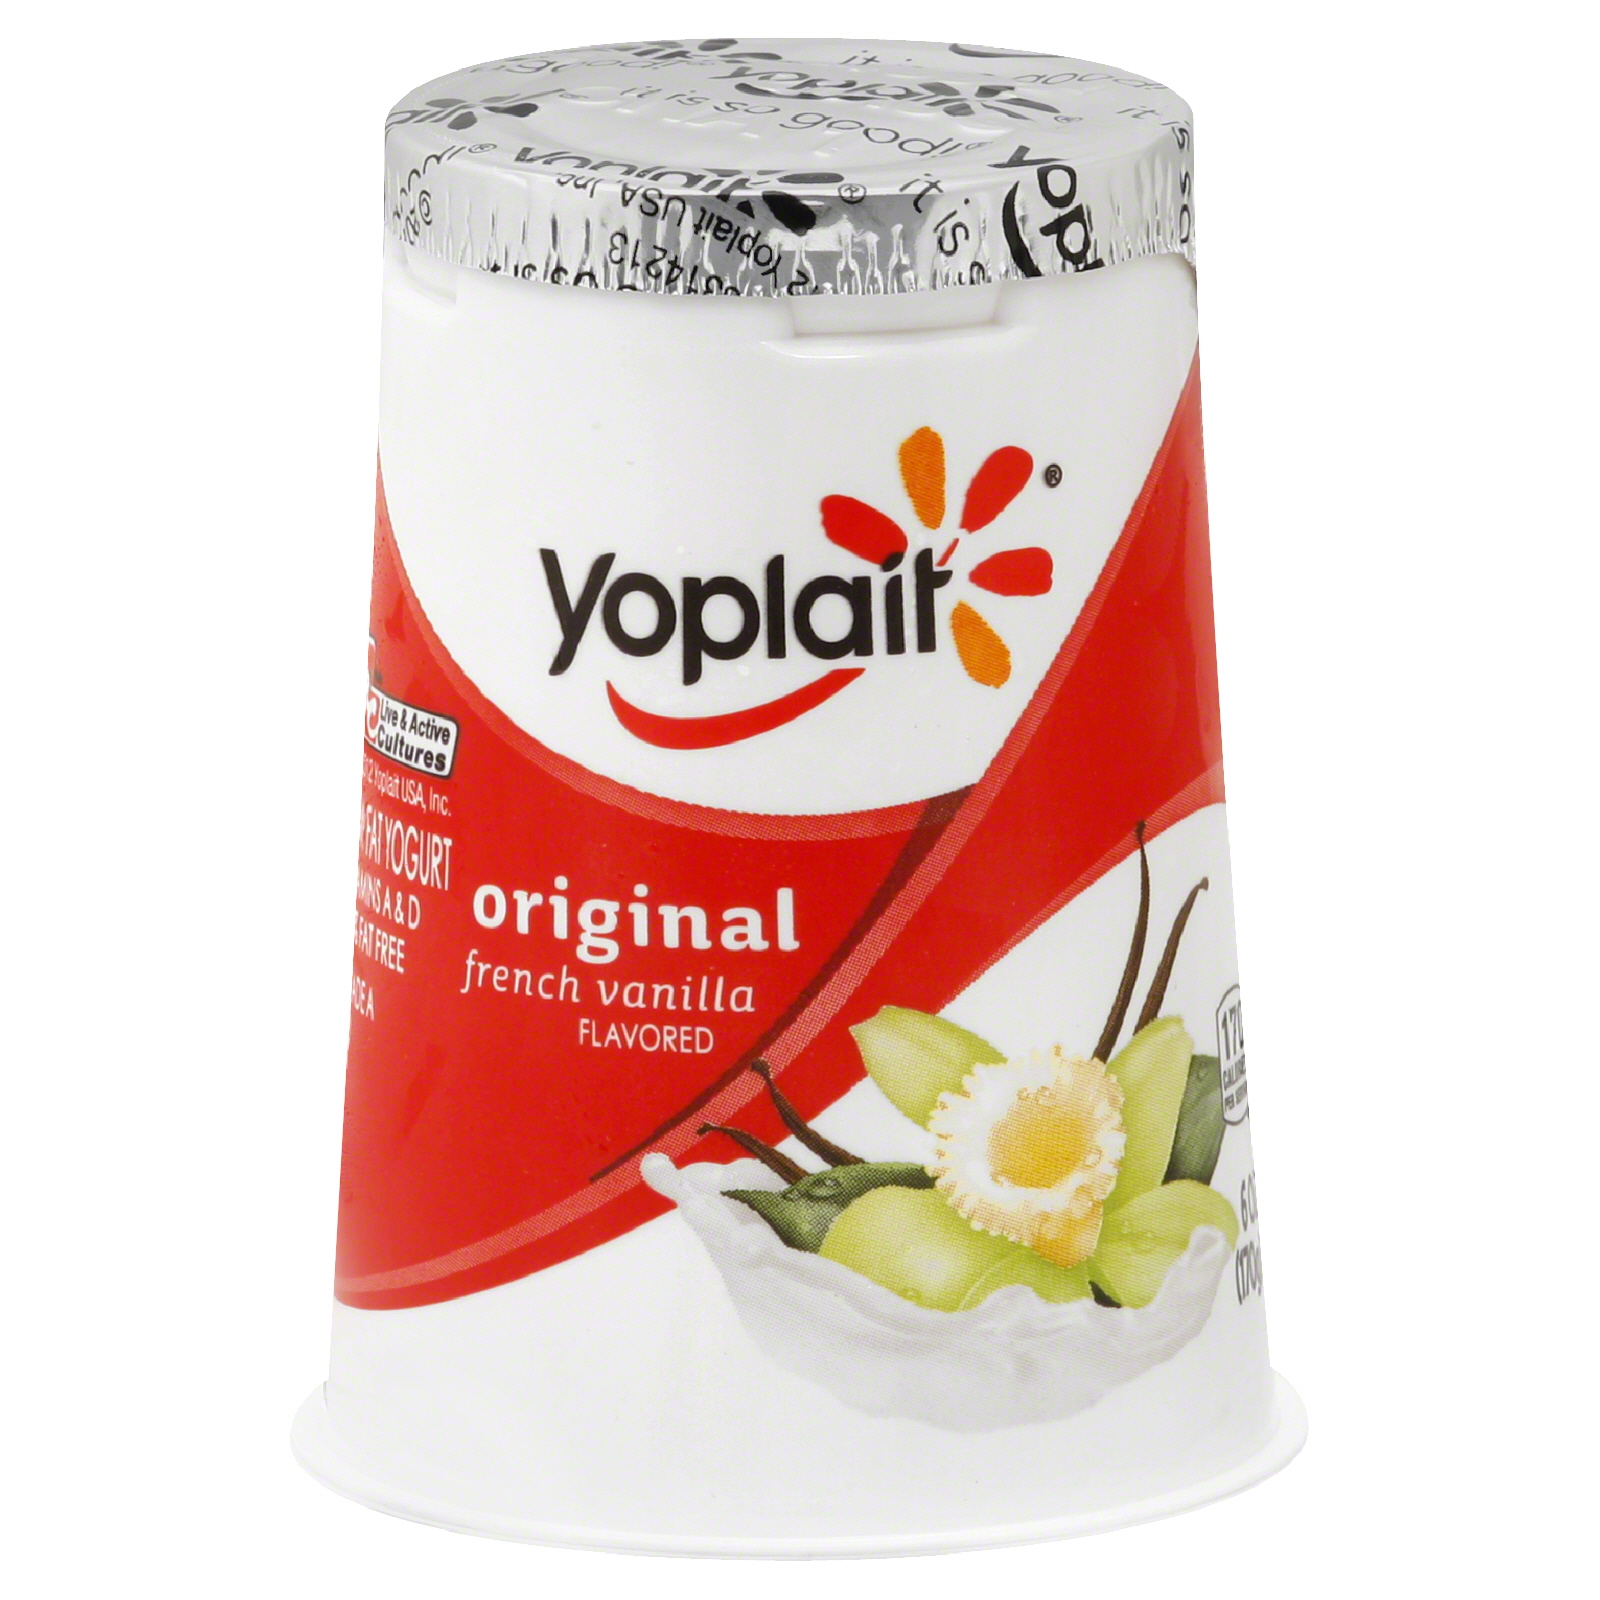 Yoplait Original Yogurt, Lowfat, French Vanilla Flavored, 6 oz (170 g)